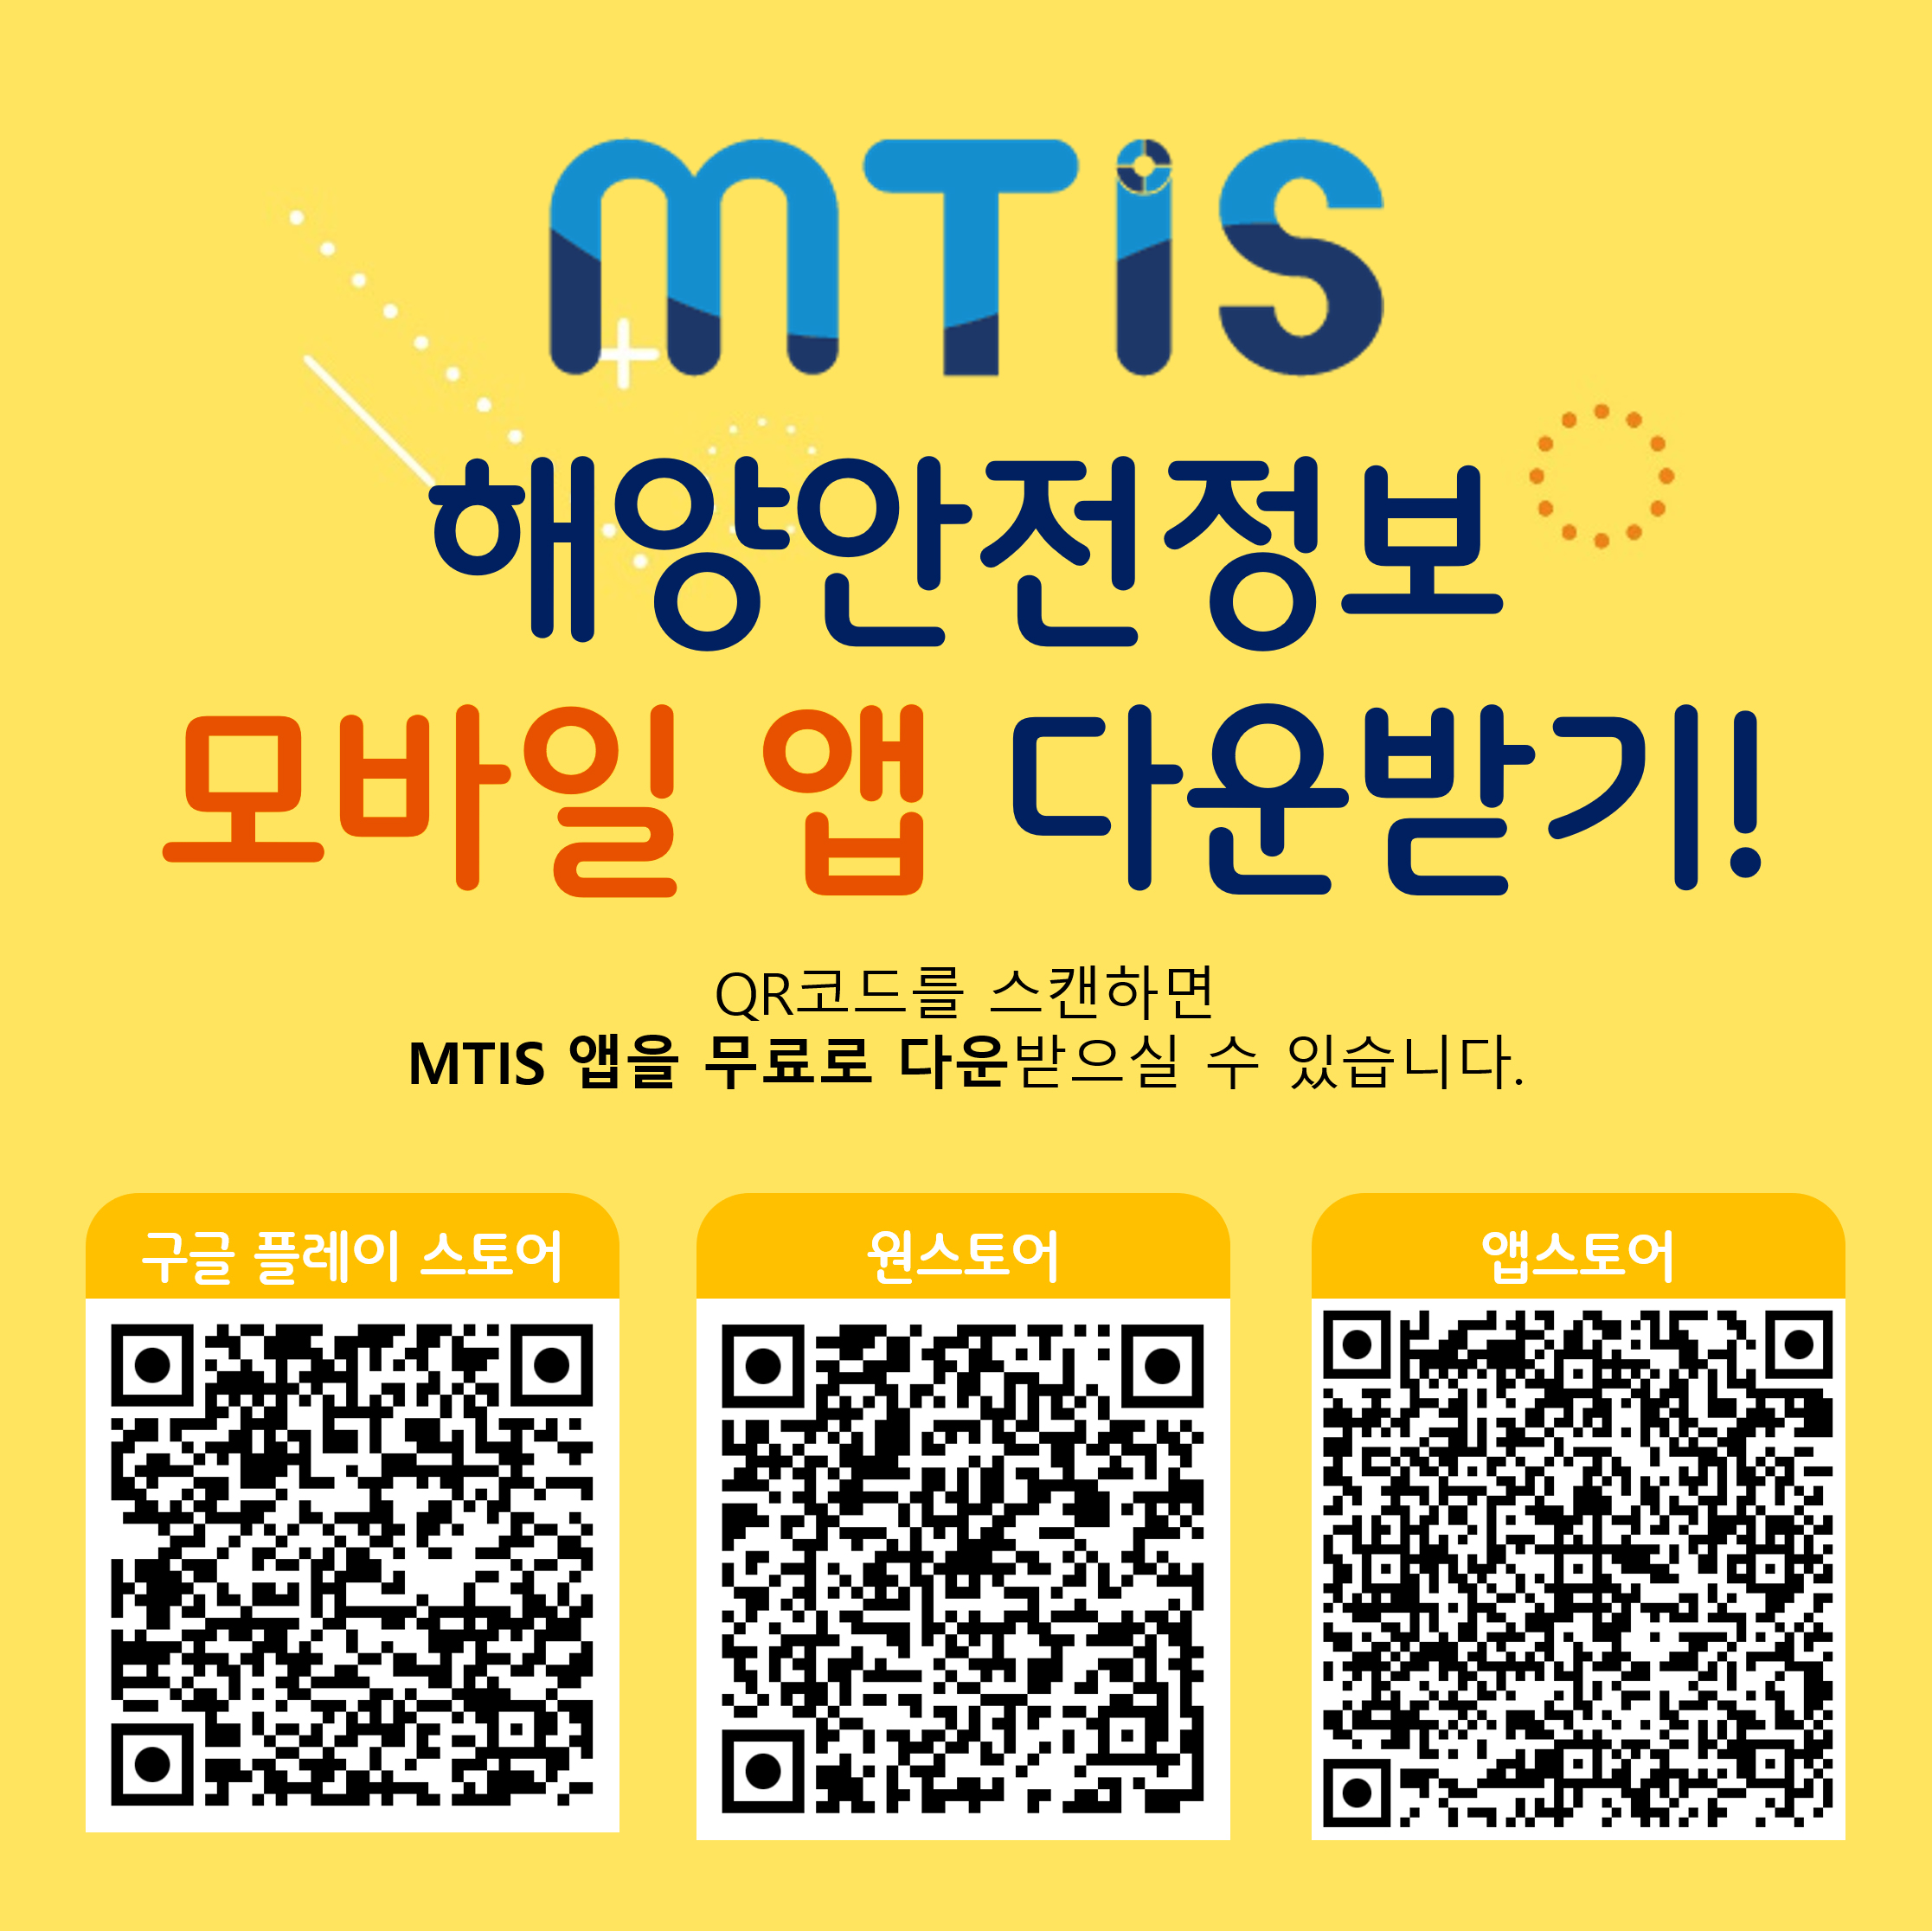 MTIS 해양안전정보 모바일 앱 다운받기!
QR코드를 스캔하면 MTIS 앱을 무료로 다운 받으실수 있습니다.
구글 플레이 스토어 : https://play.google.com/store/apps/details;jsessionid=1109EC6356A1A74A350CB3AC025C35D3?id=kr.or.komsa.mtis
원스토어 : https://m.onestore.co.kr/mobilepoc/apps/appsDetail.omp?prodId=0000771271
앱스토어 : https://apps.apple.com/kr/app/%ED%95%B4%EC%96%91%EA%B5%90%ED%86%B5%EC%95%88%EC%A0%84%EC%A0%95%EB%B3%B4/id6462842483